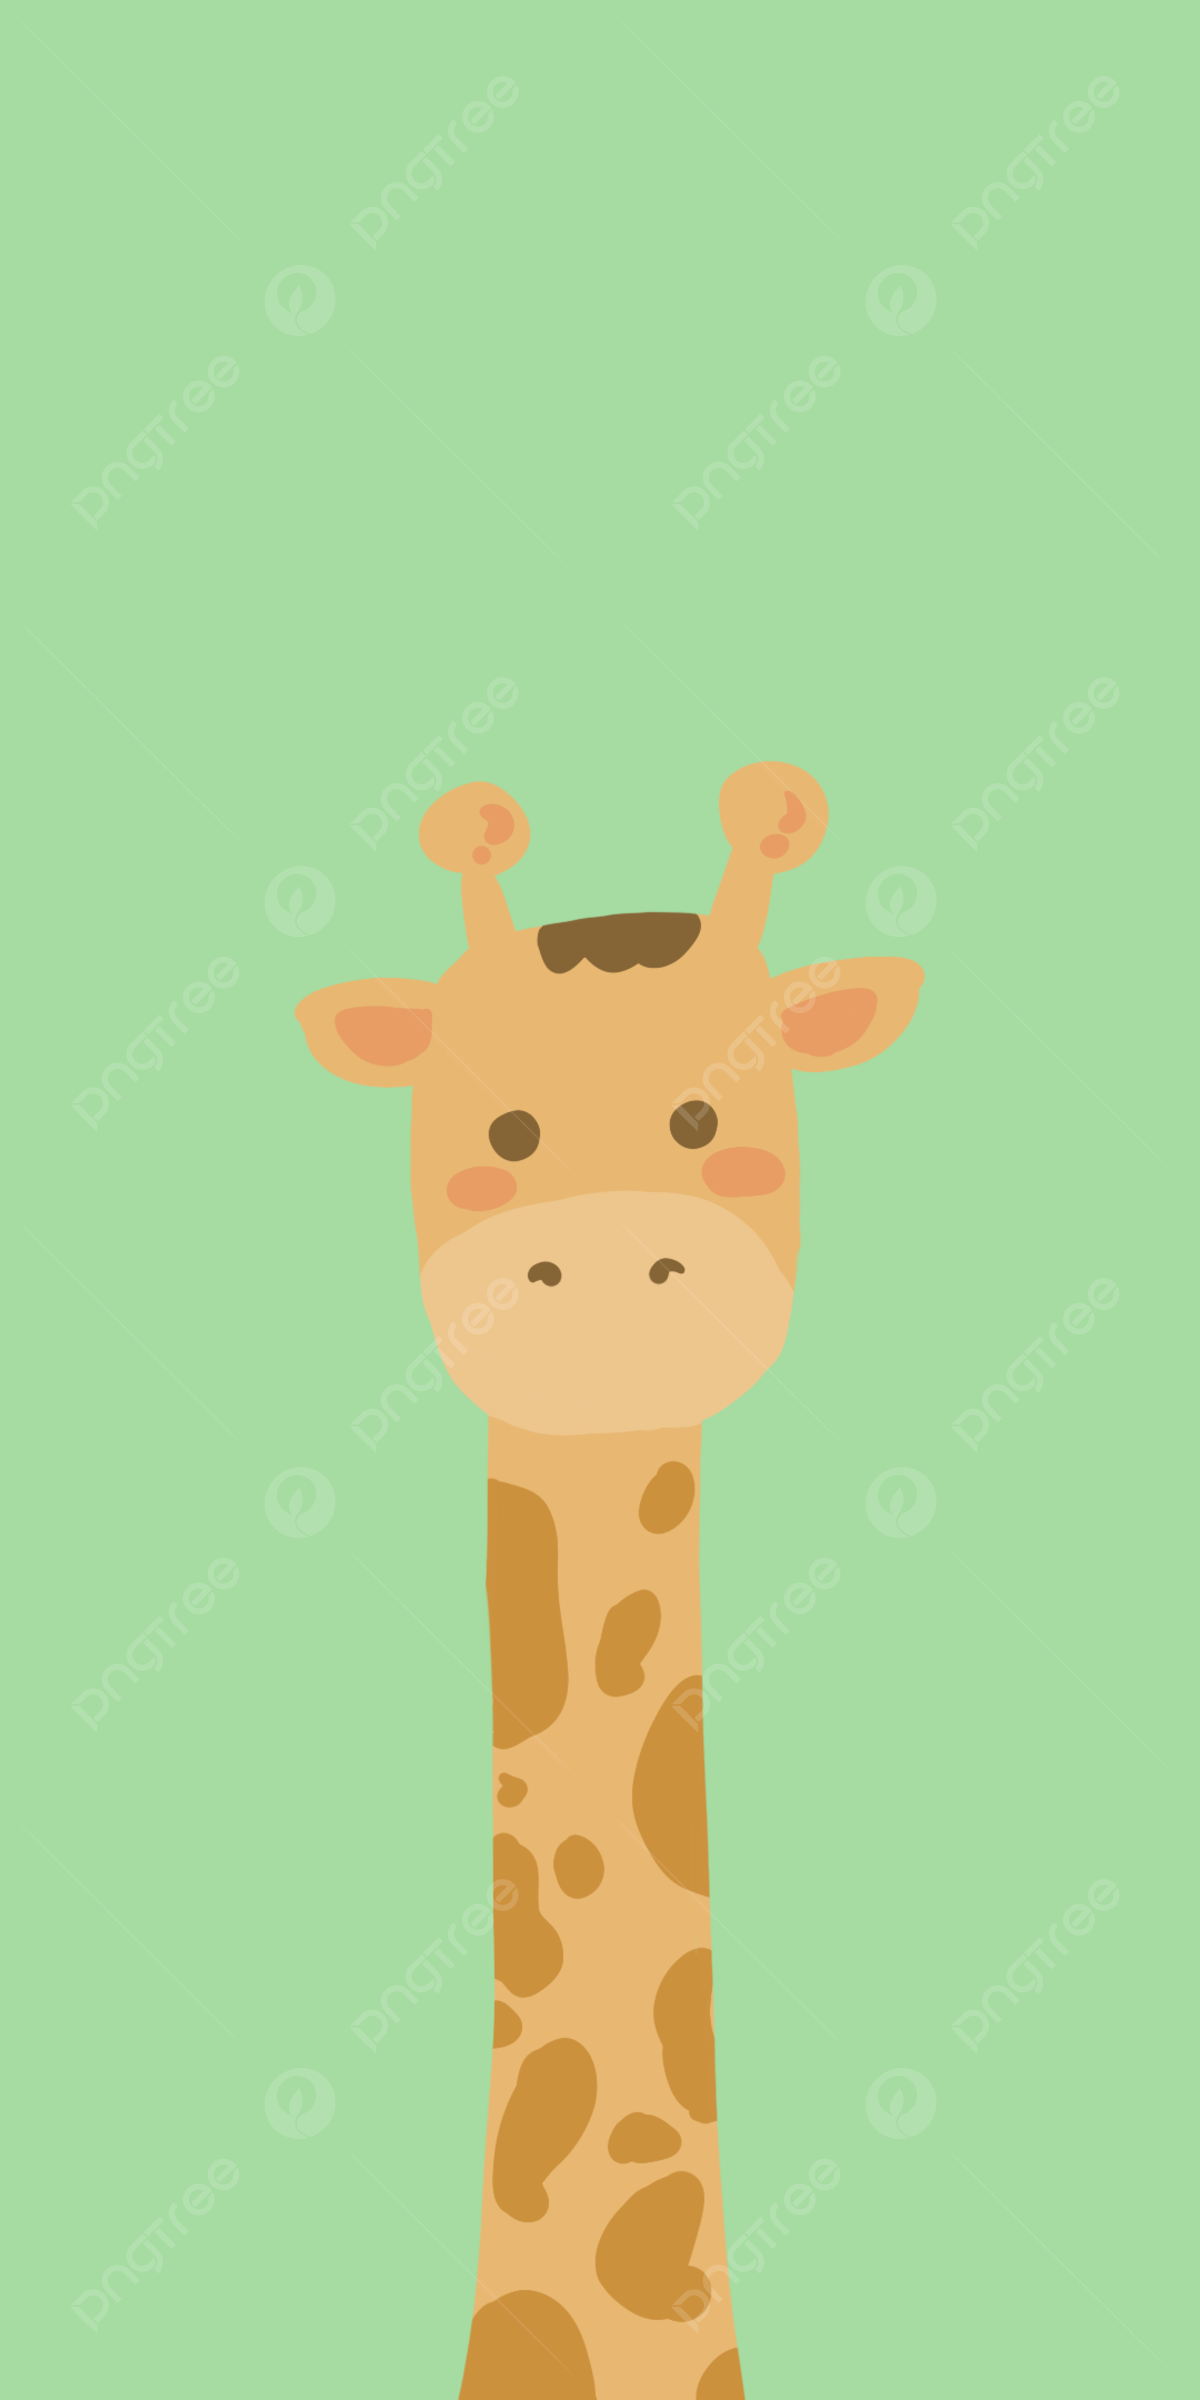  Giraffe Hintergrundbild 1200x2400. Original Cute Giraffe Mobile Phone Wallpaper Background Wallpaper Image For Free Download